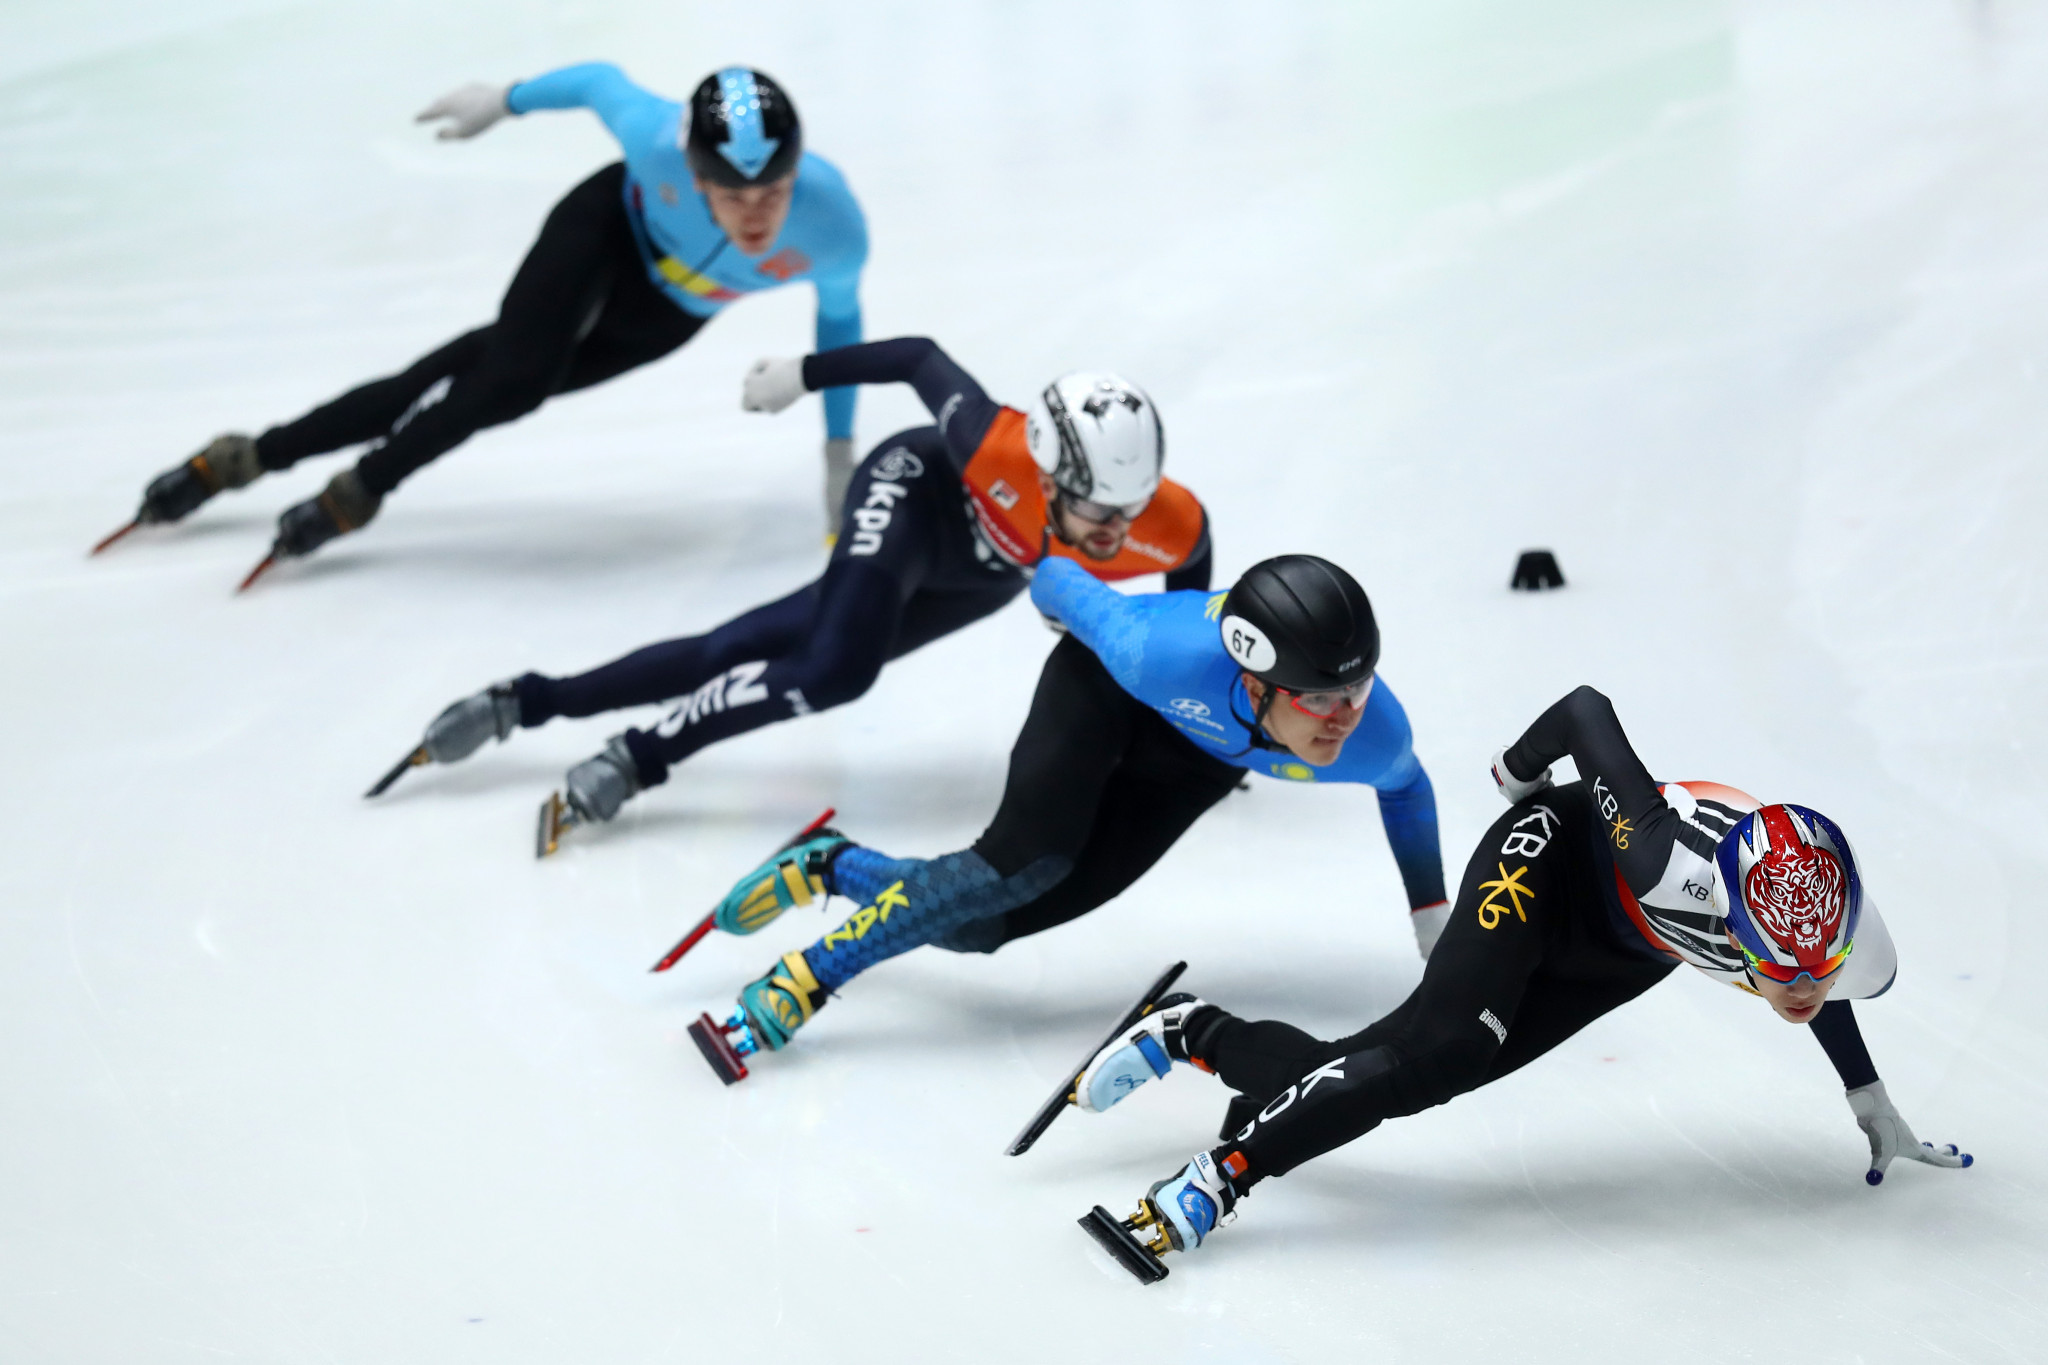 ISU reveal World Short Track Speed Skating Championships may take place next season